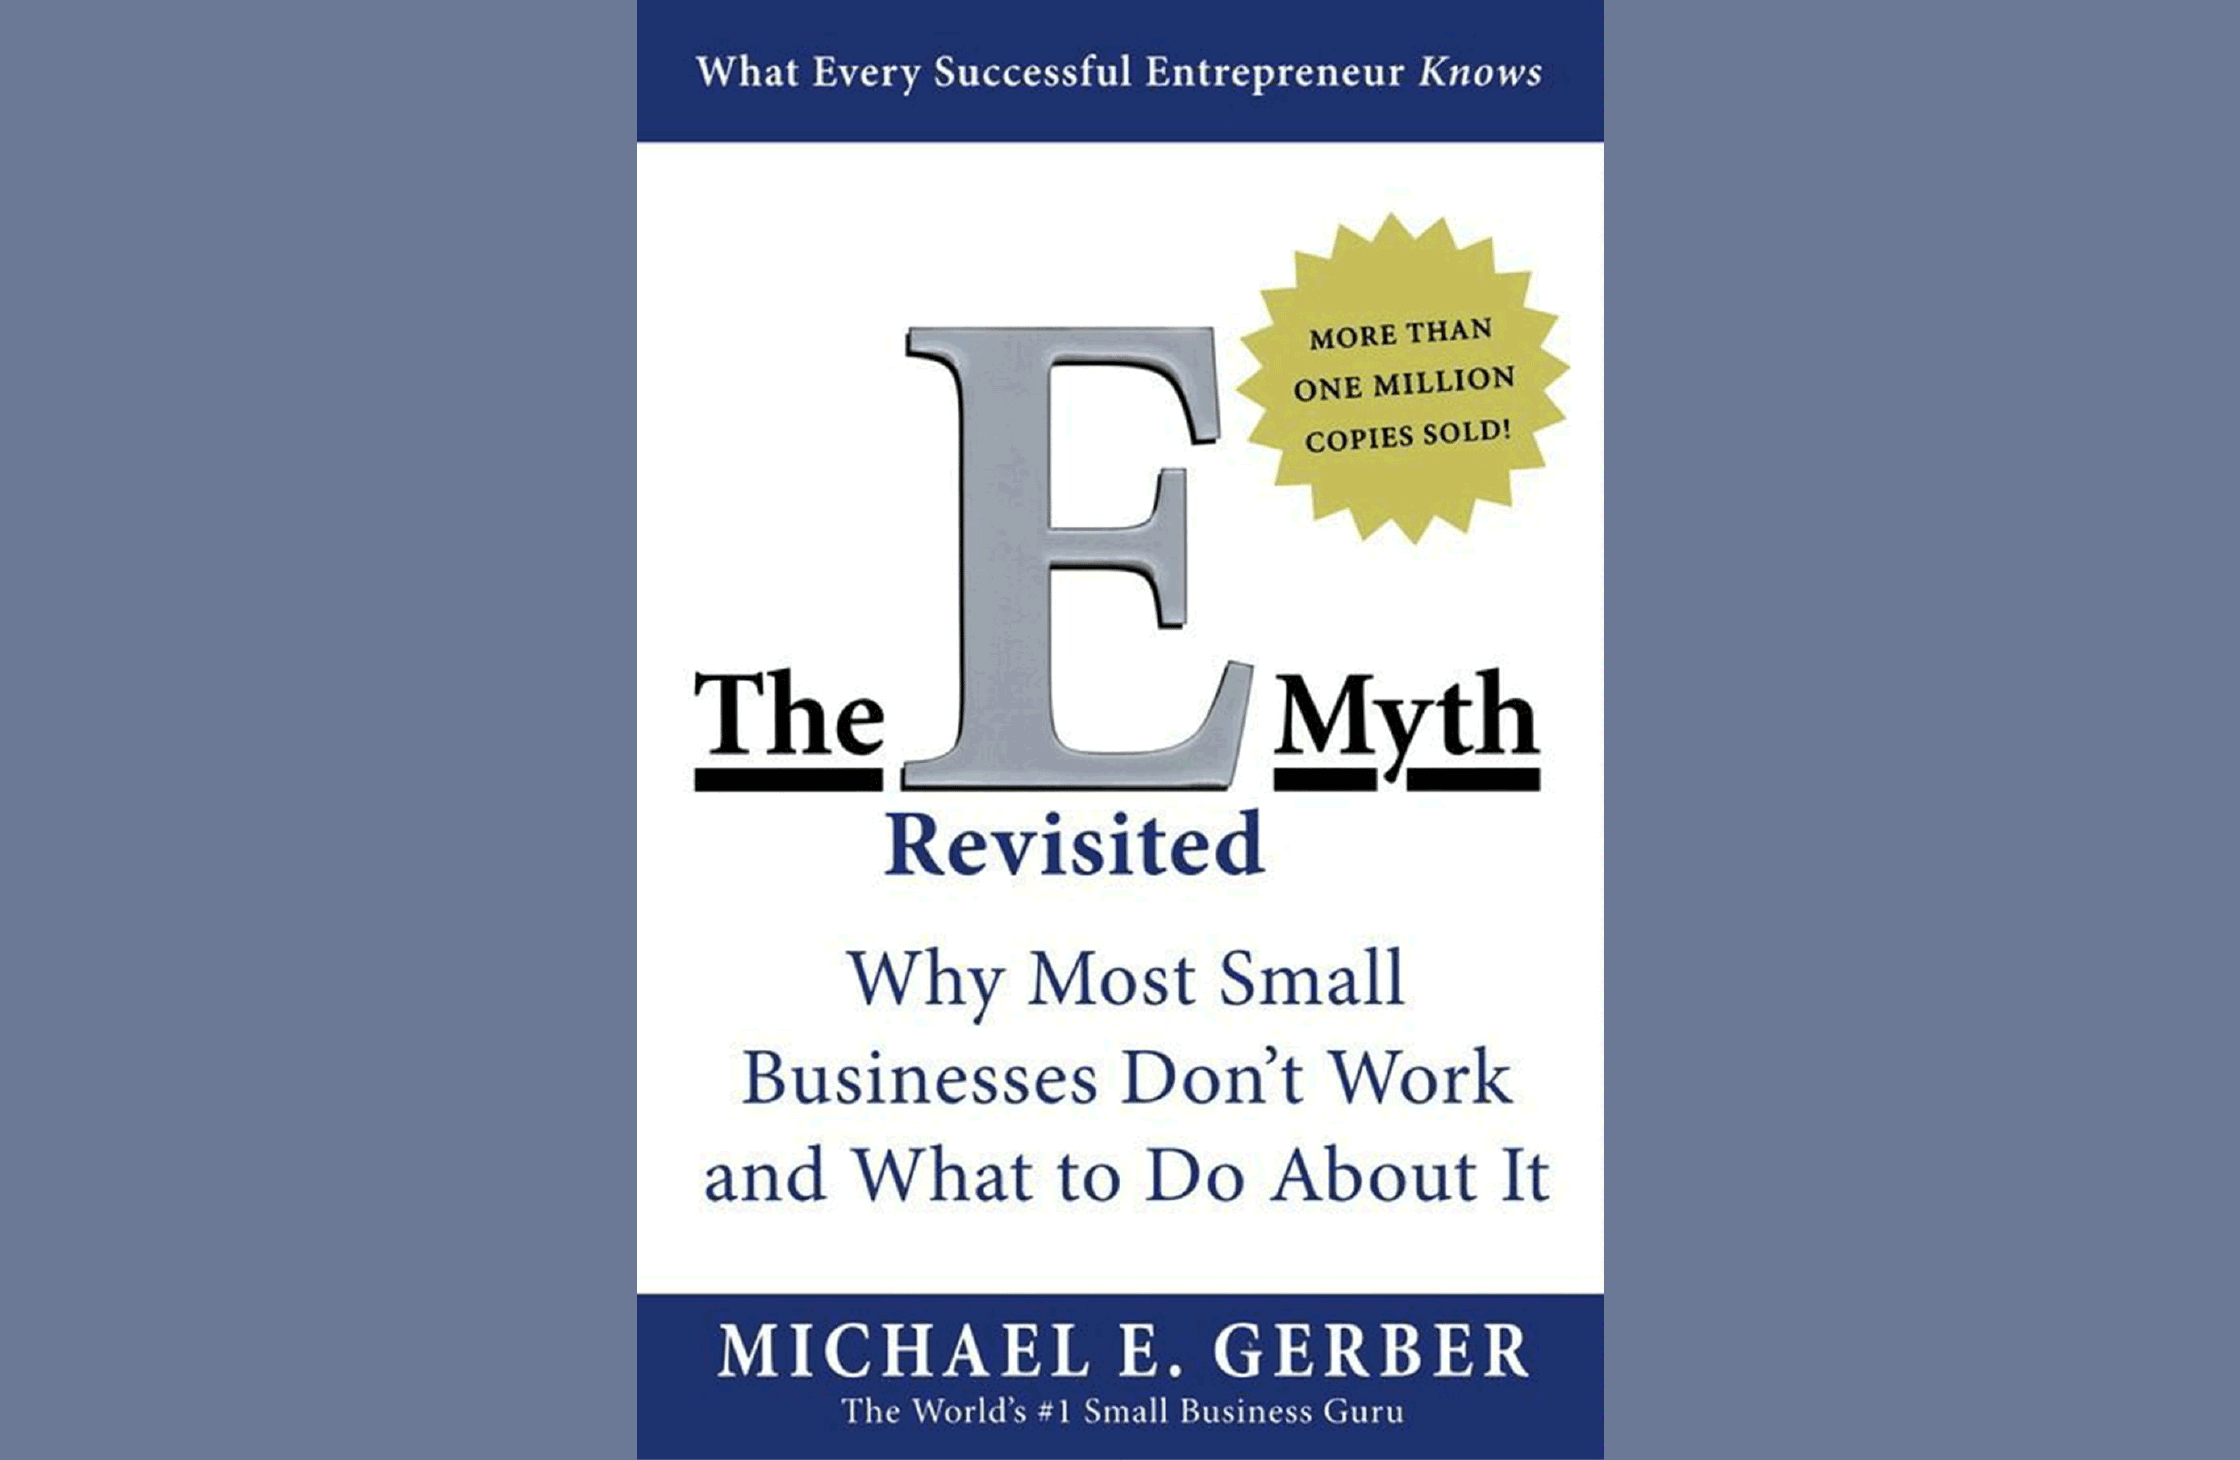 Summary: The E-Myth Revisited by Michael E. Gerber